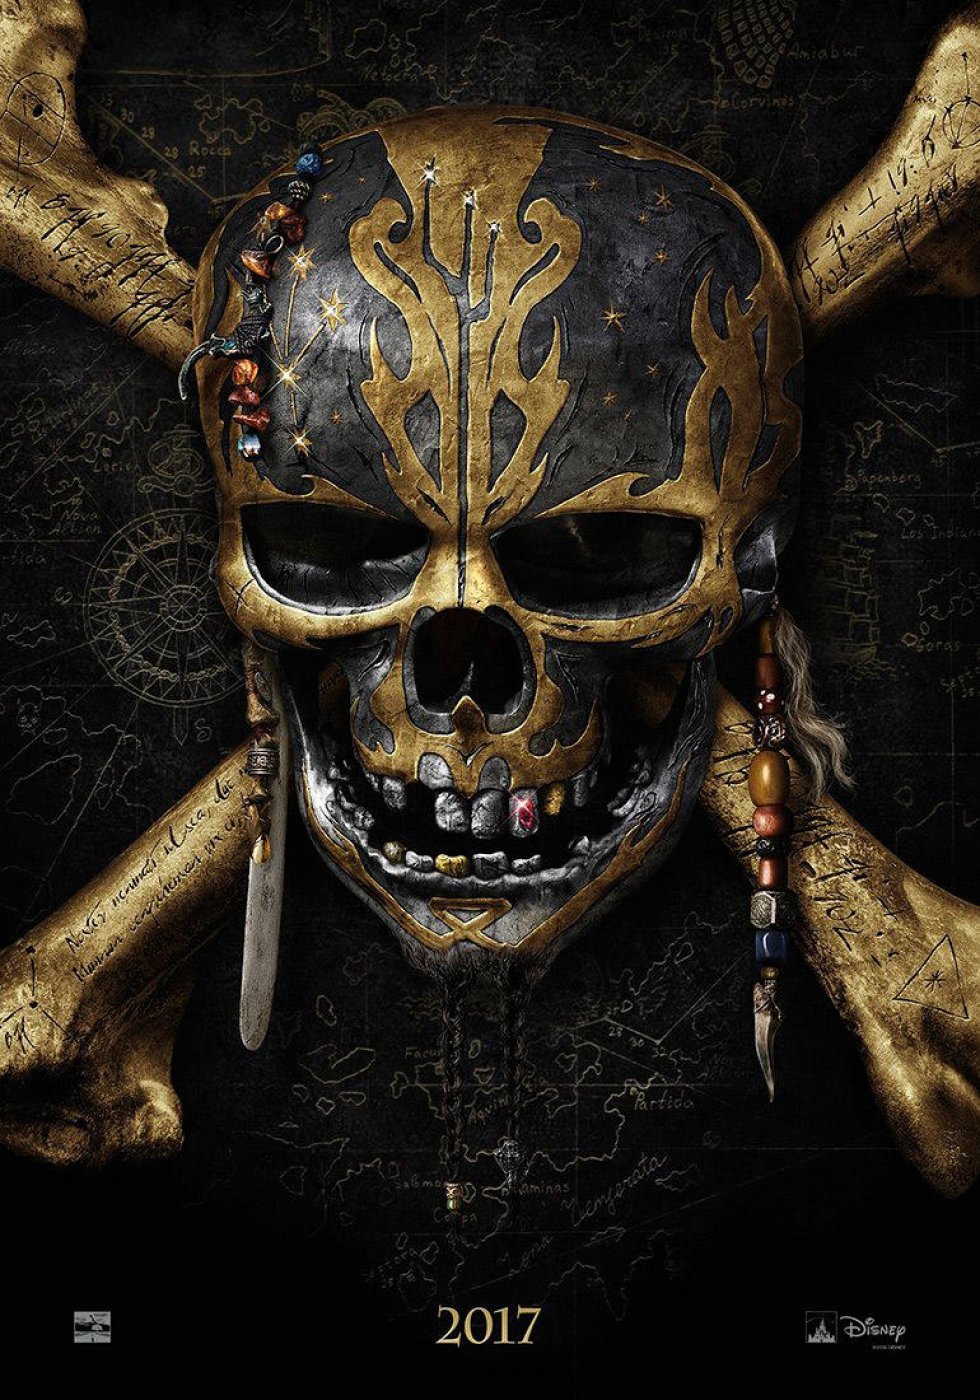 Her er den første trailer til den nye Pirates Of The Caribbean-film